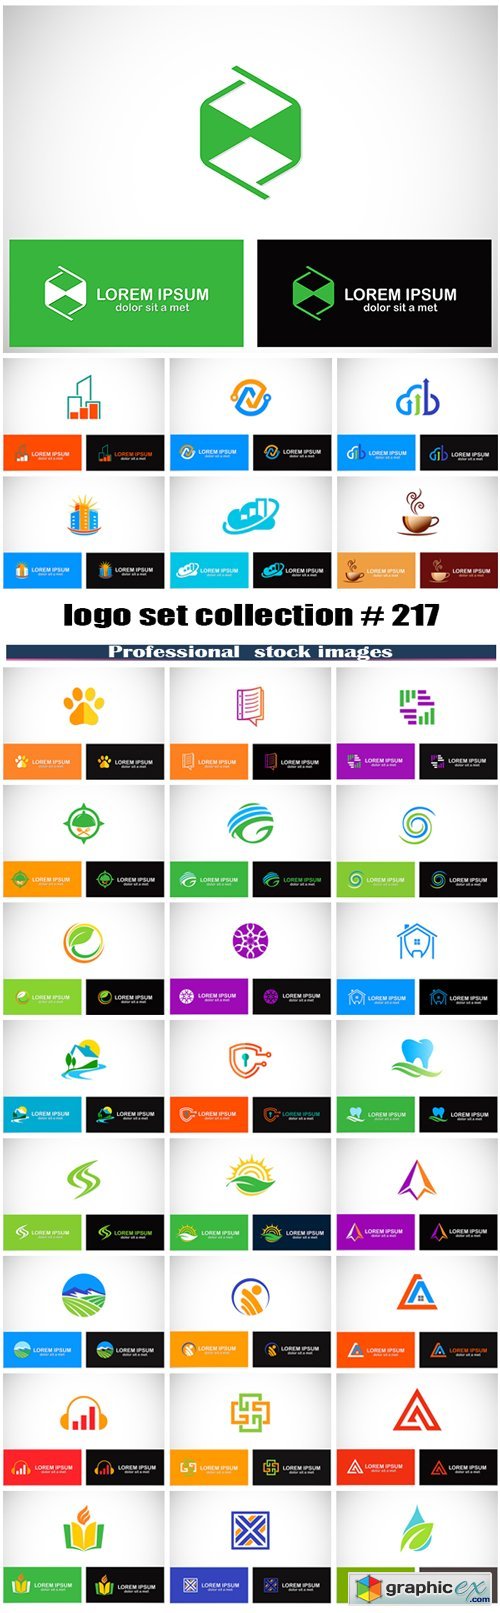 Logo set collection # 217